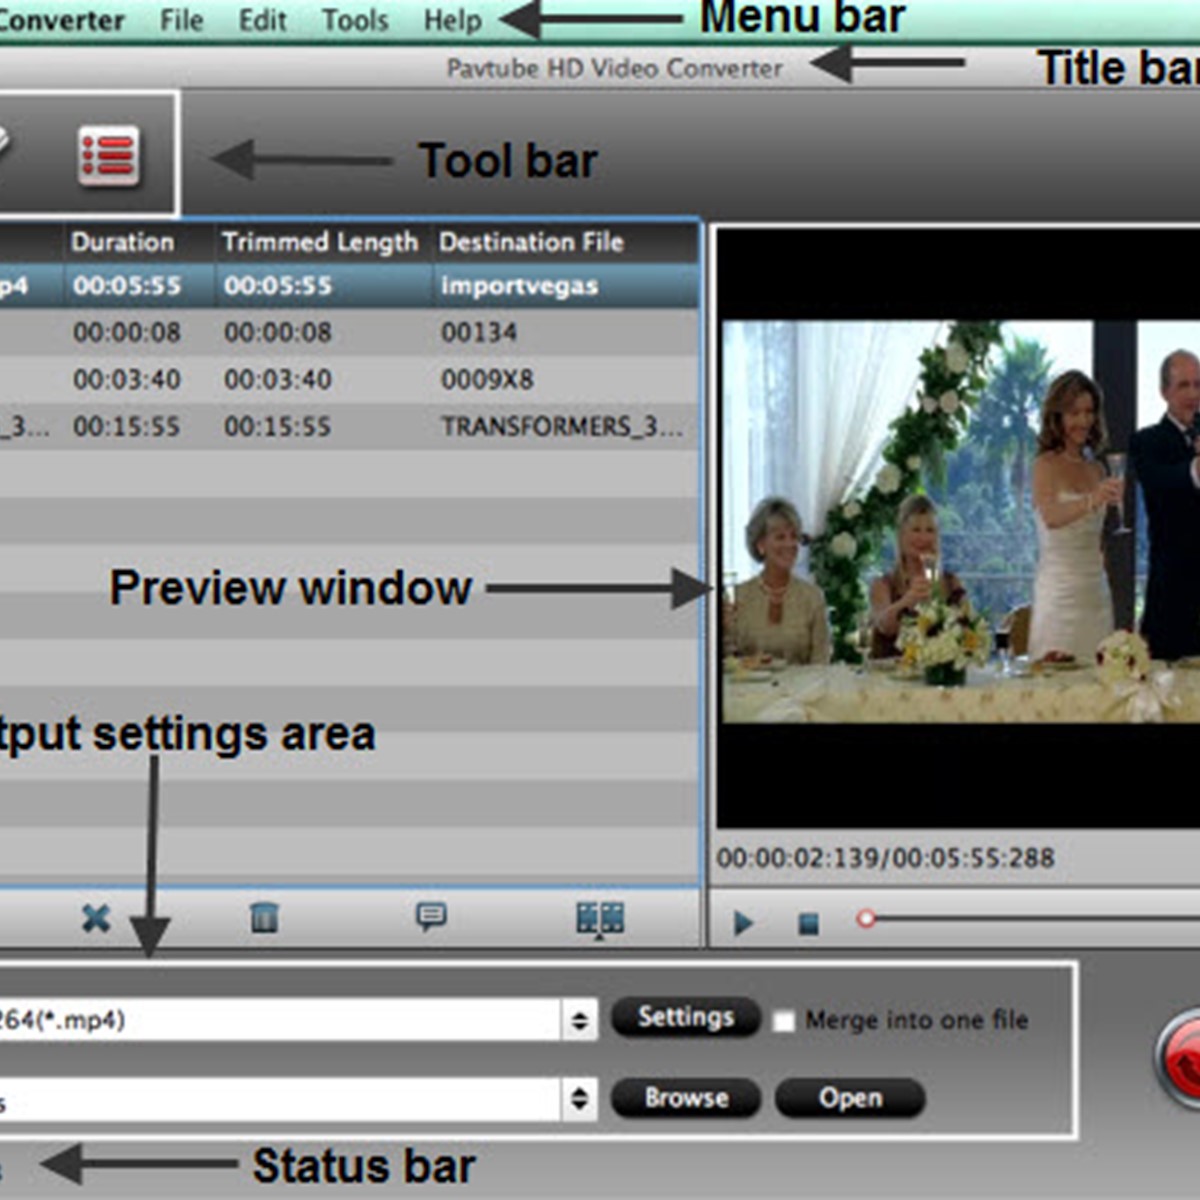 Pavtube Hd Video Converter For Mac Free